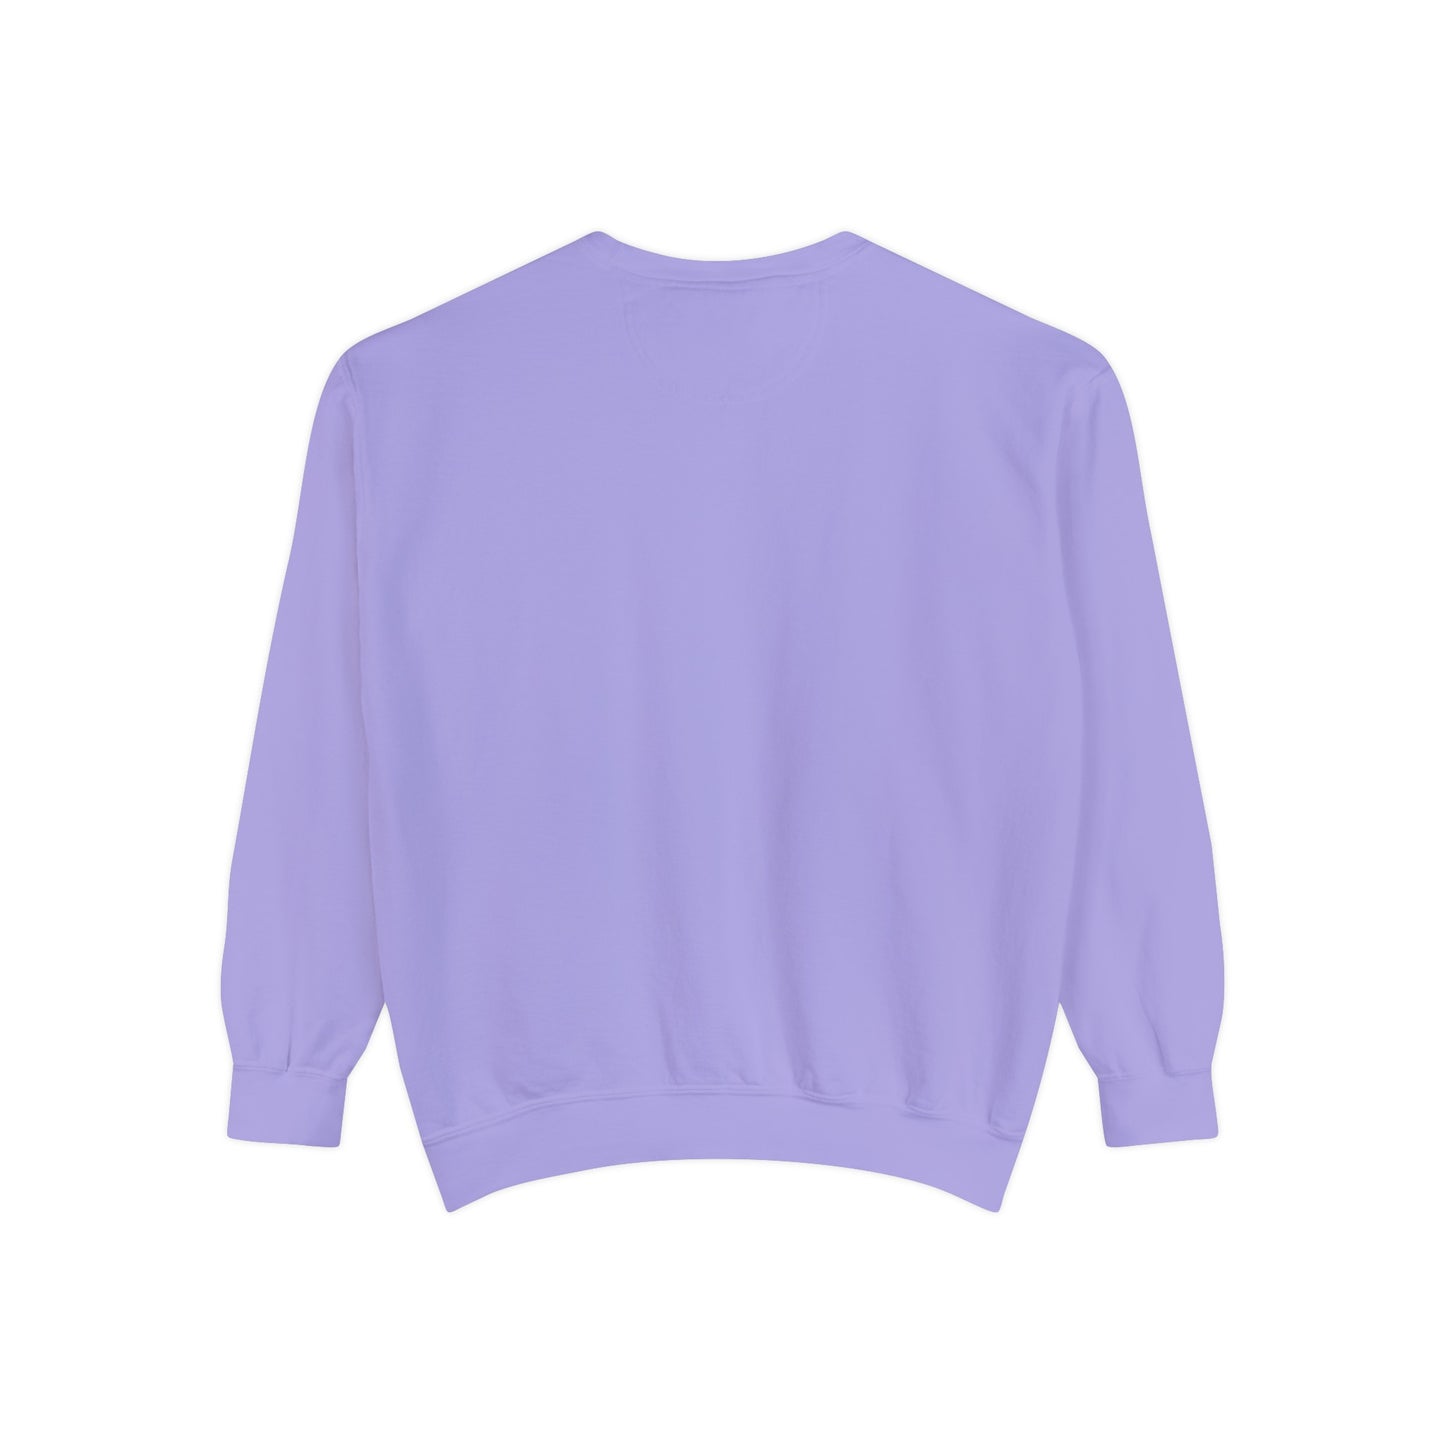 Hot potato alert! Garment-Dyed Sweatshirt